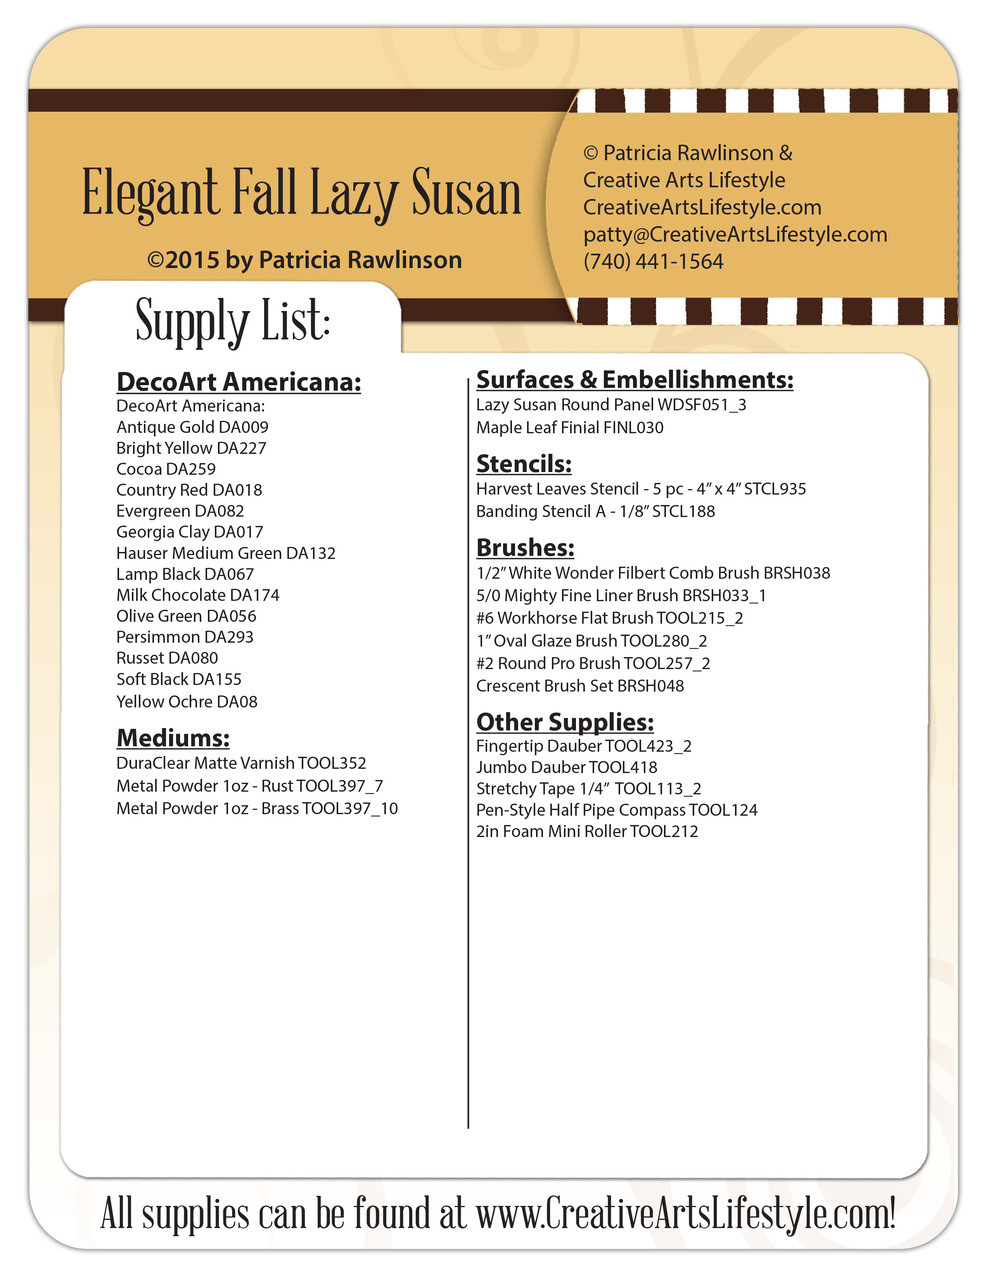 Elegant Fall Lazy Susan Pattern Packet - Patricia Rawlinson